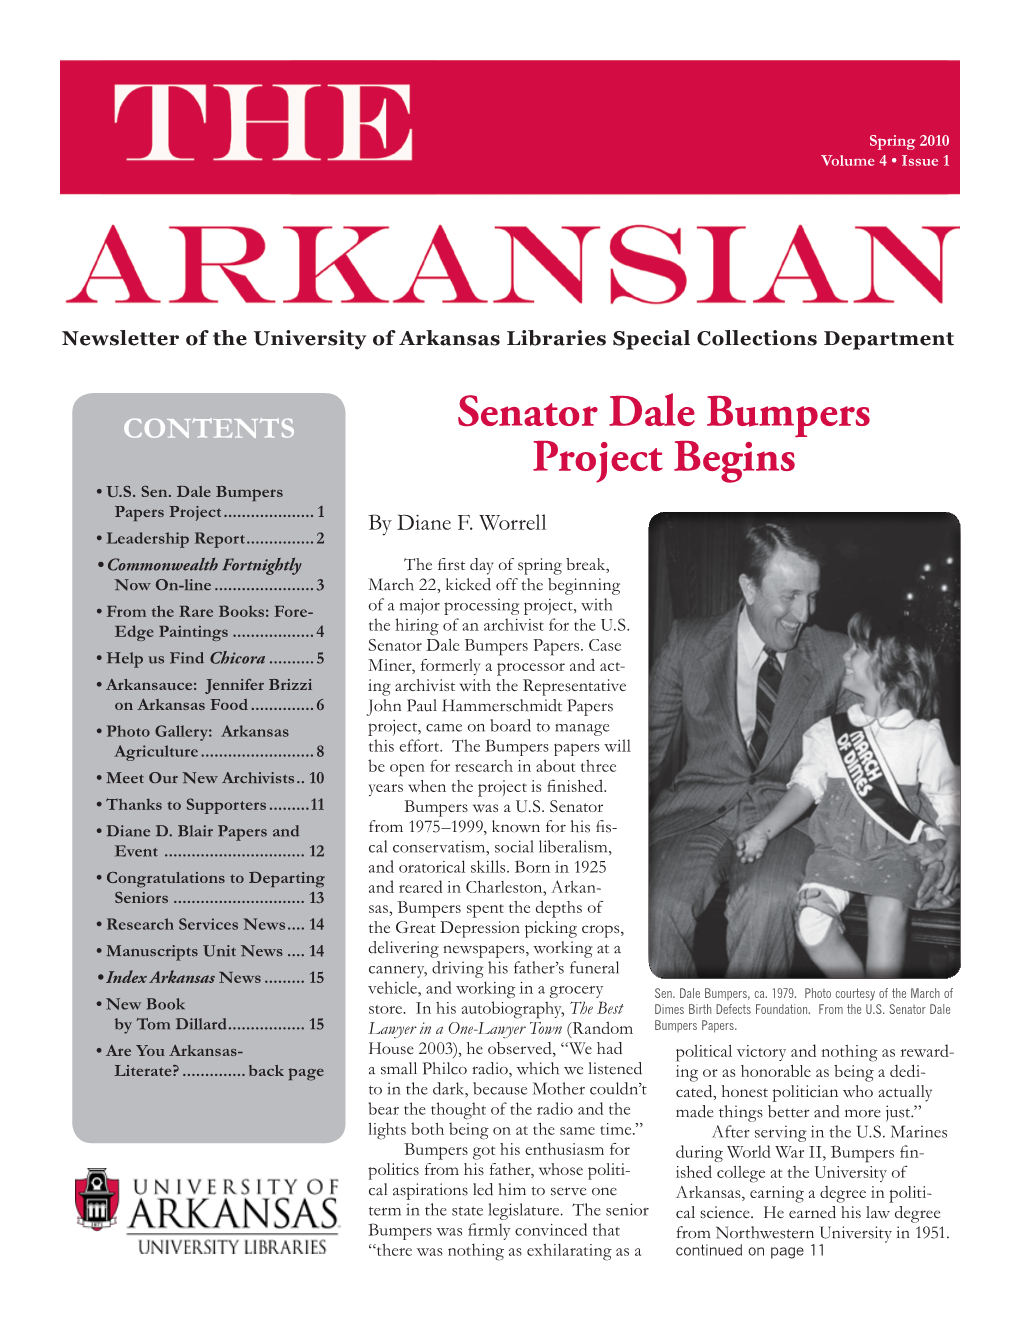 Senator Dale Bumpers Project Begins • U.S